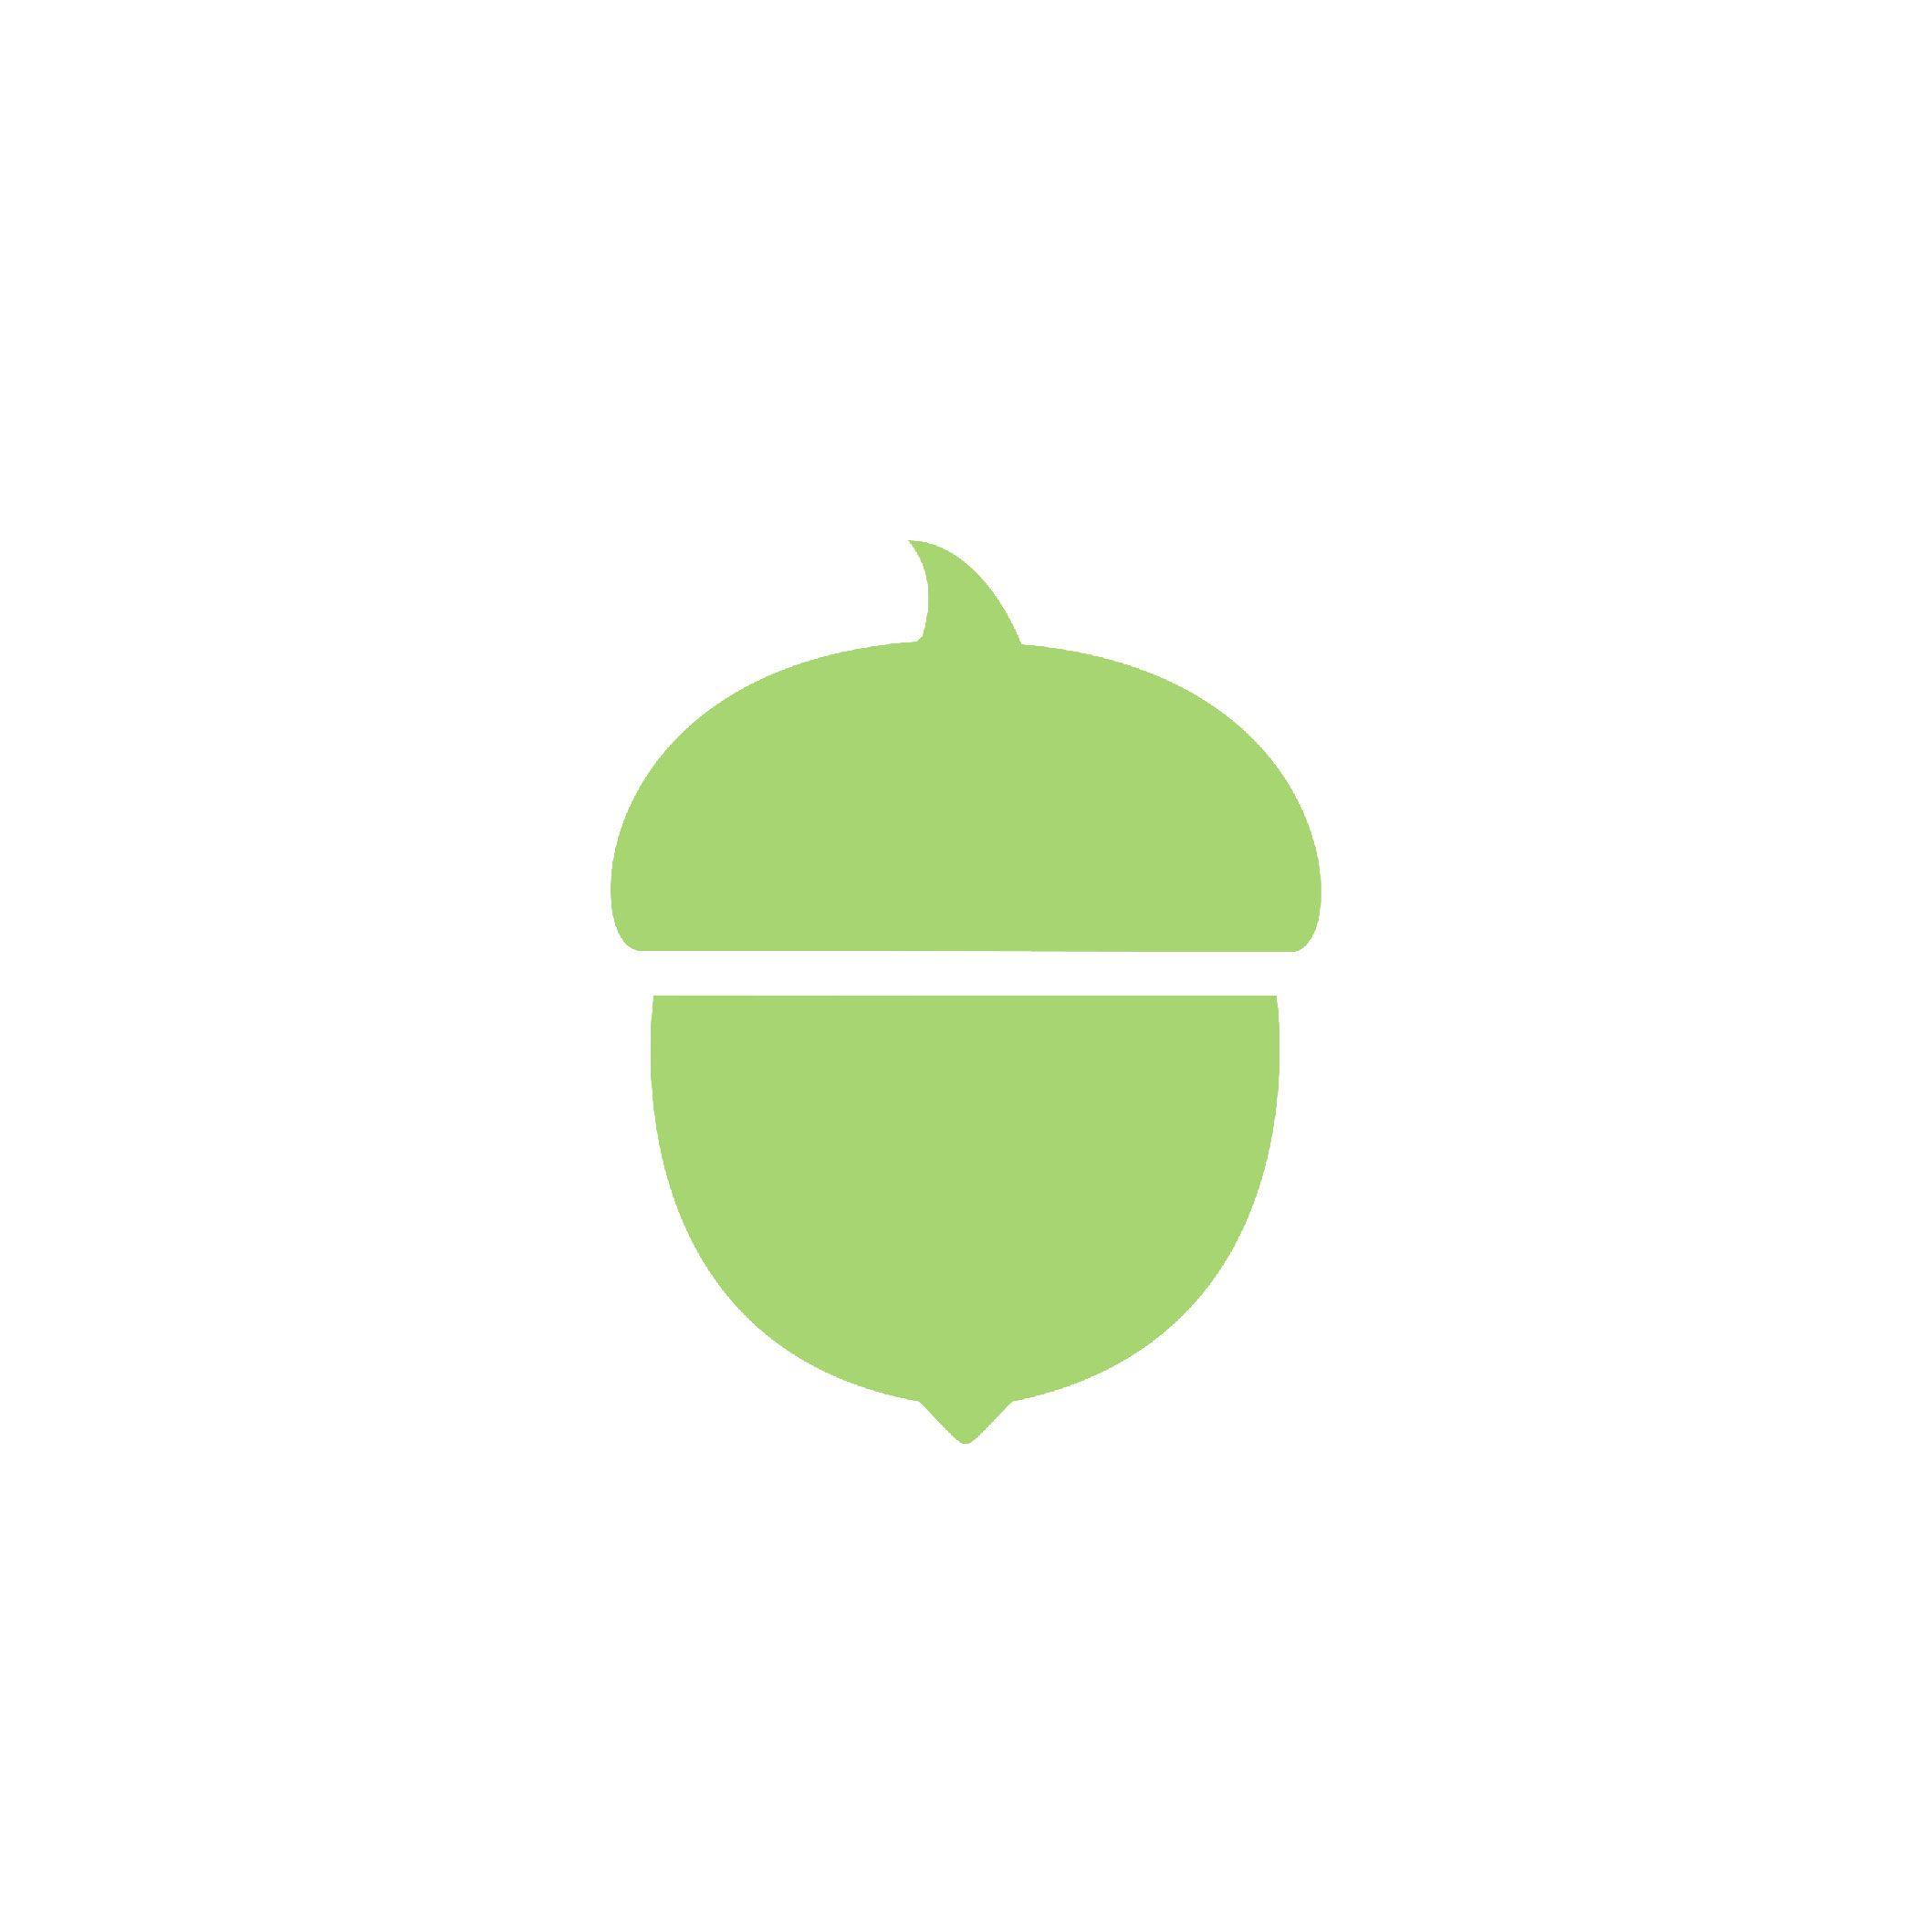 Acorn Logo - Image result for acorn logo. Acorn Logo. Logos, Logo